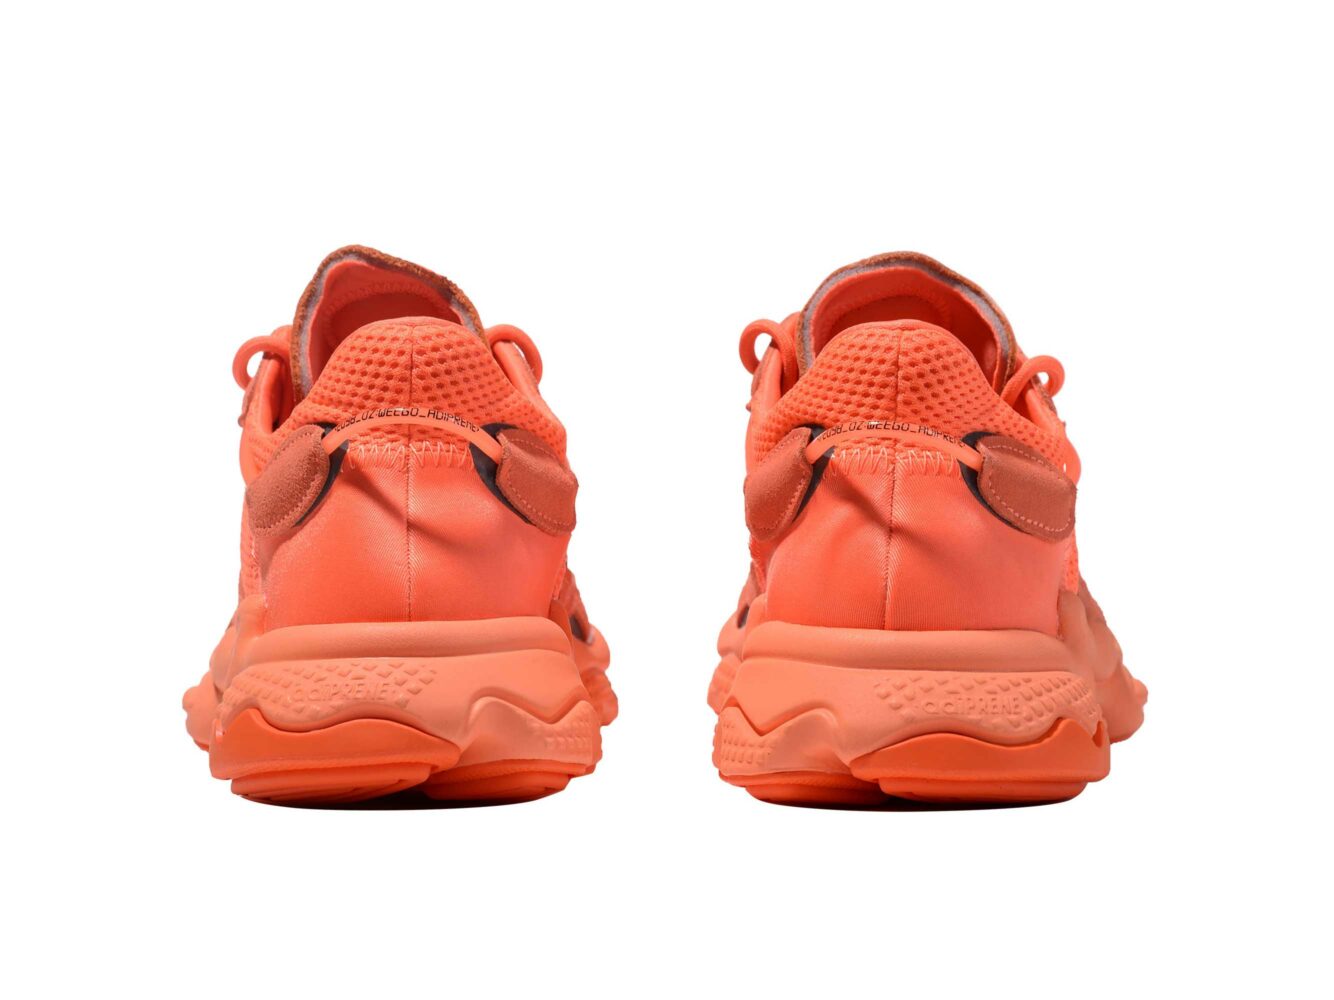 adidas ozweego orange EE6465 купить